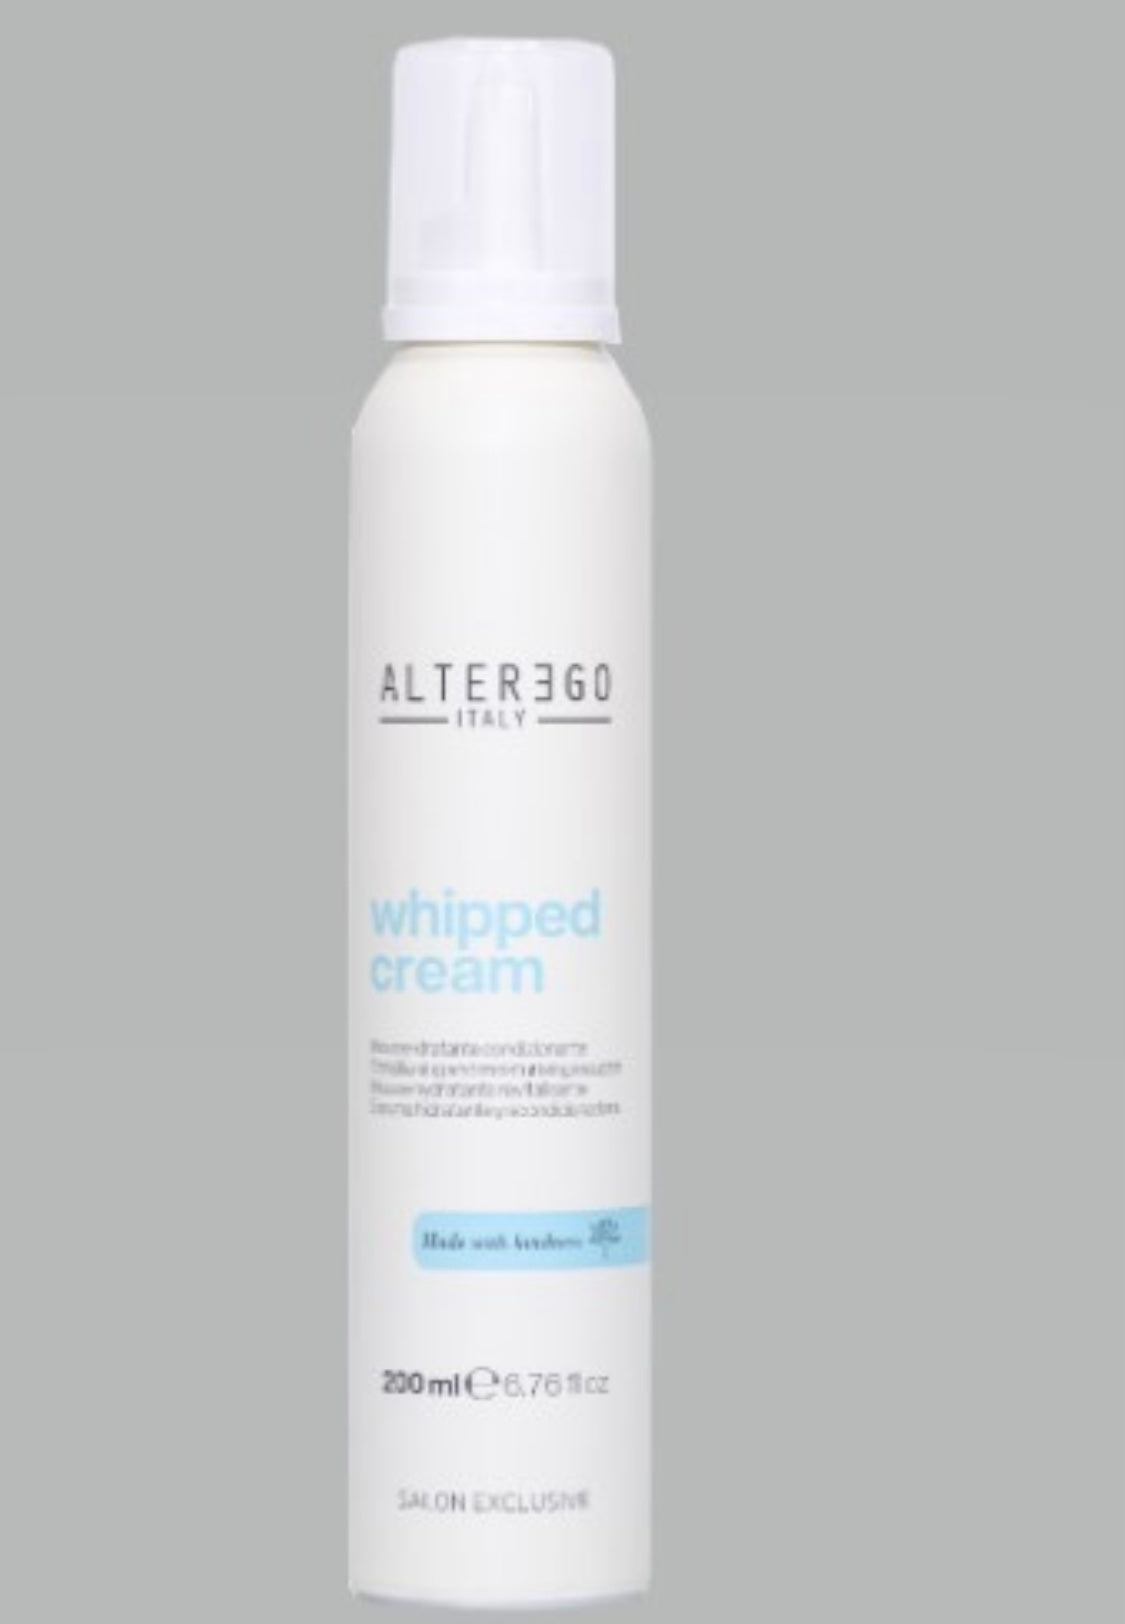 Alterego - Whipped cream 6.76 fl. oz. / 200 ml